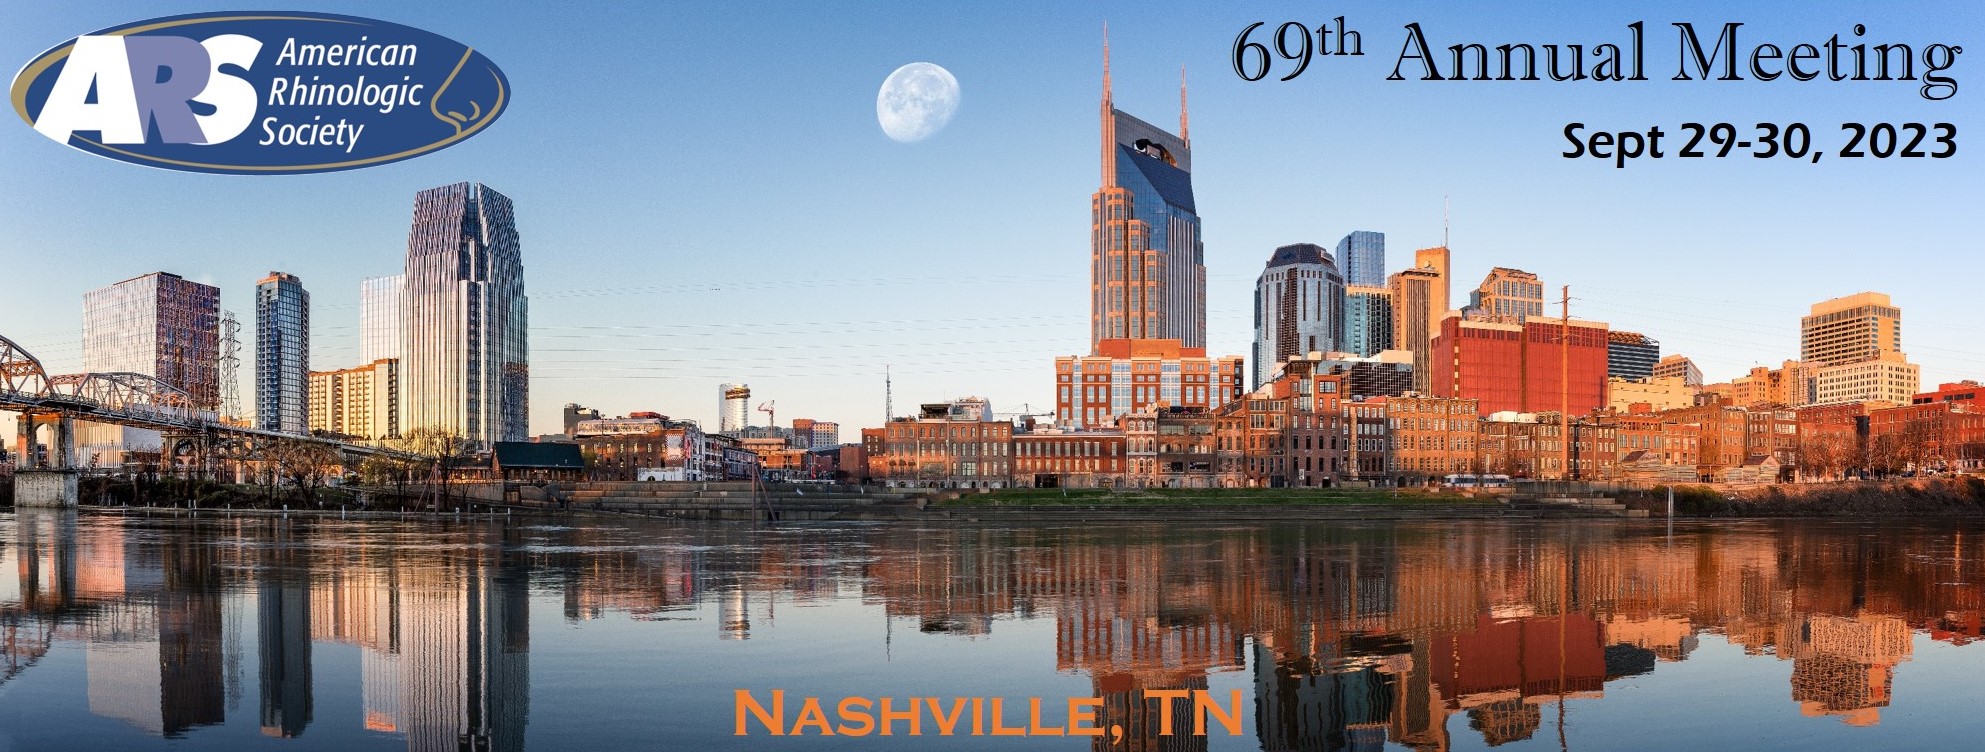 ARS 69th Annual Meeting in Nashville September 29 2023